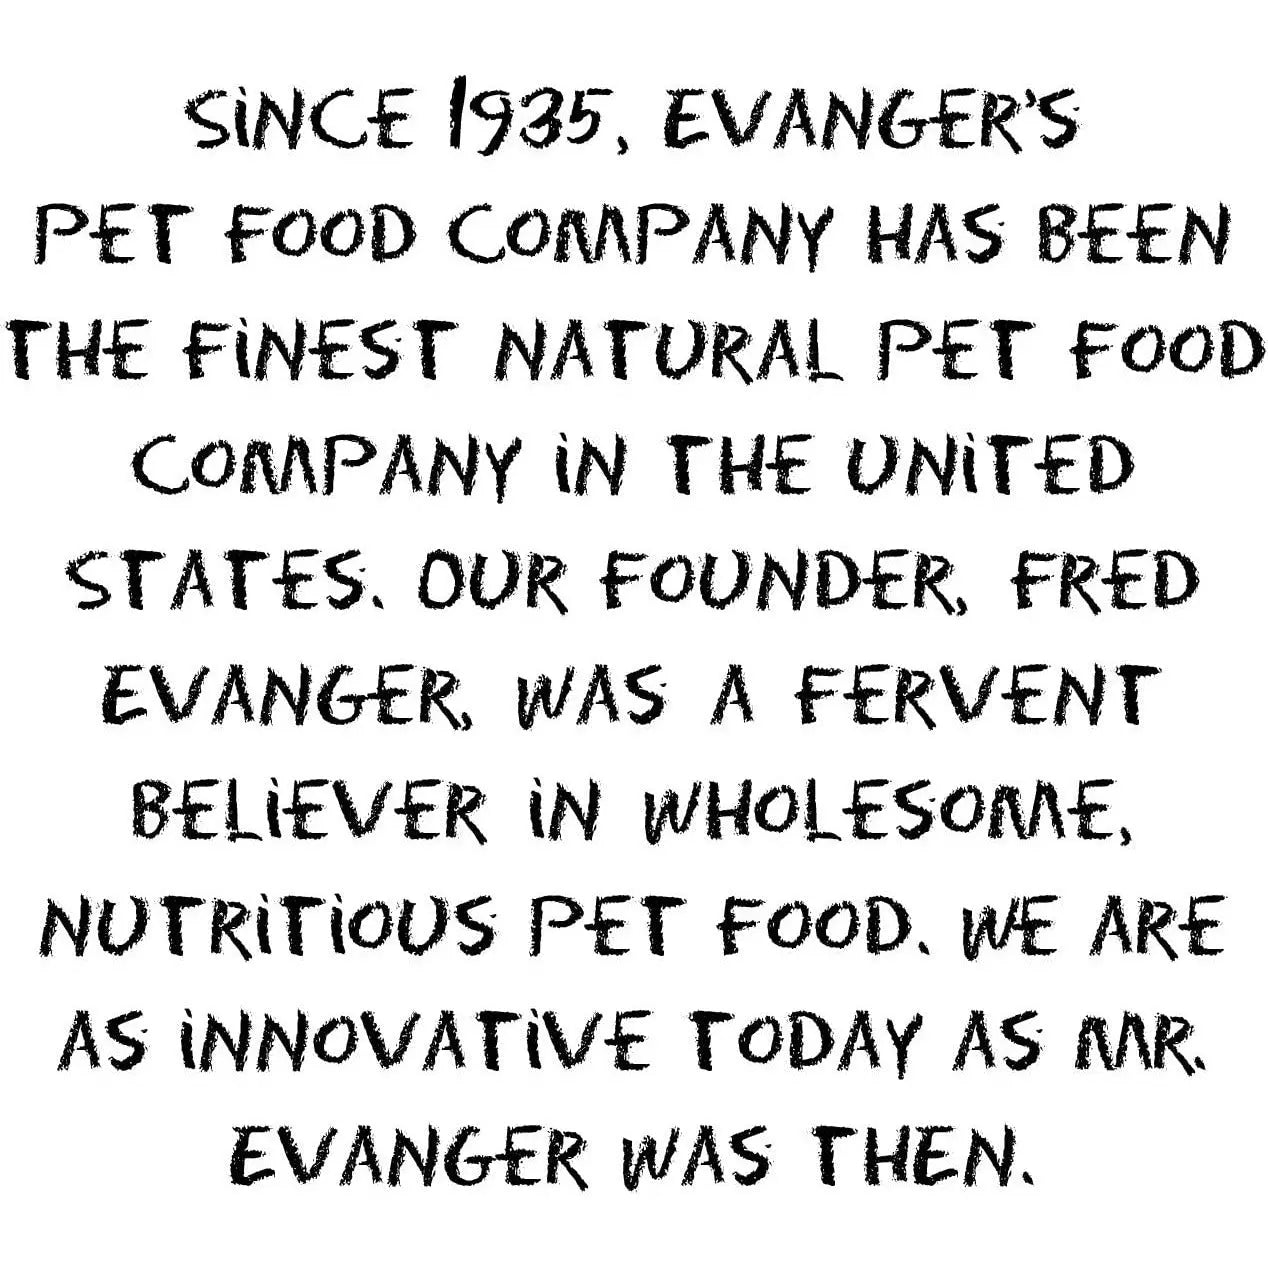 Evanger's Super Premium Chicken Dinner Canned Dog Food 12.8-oz, case of 12 Evanger's